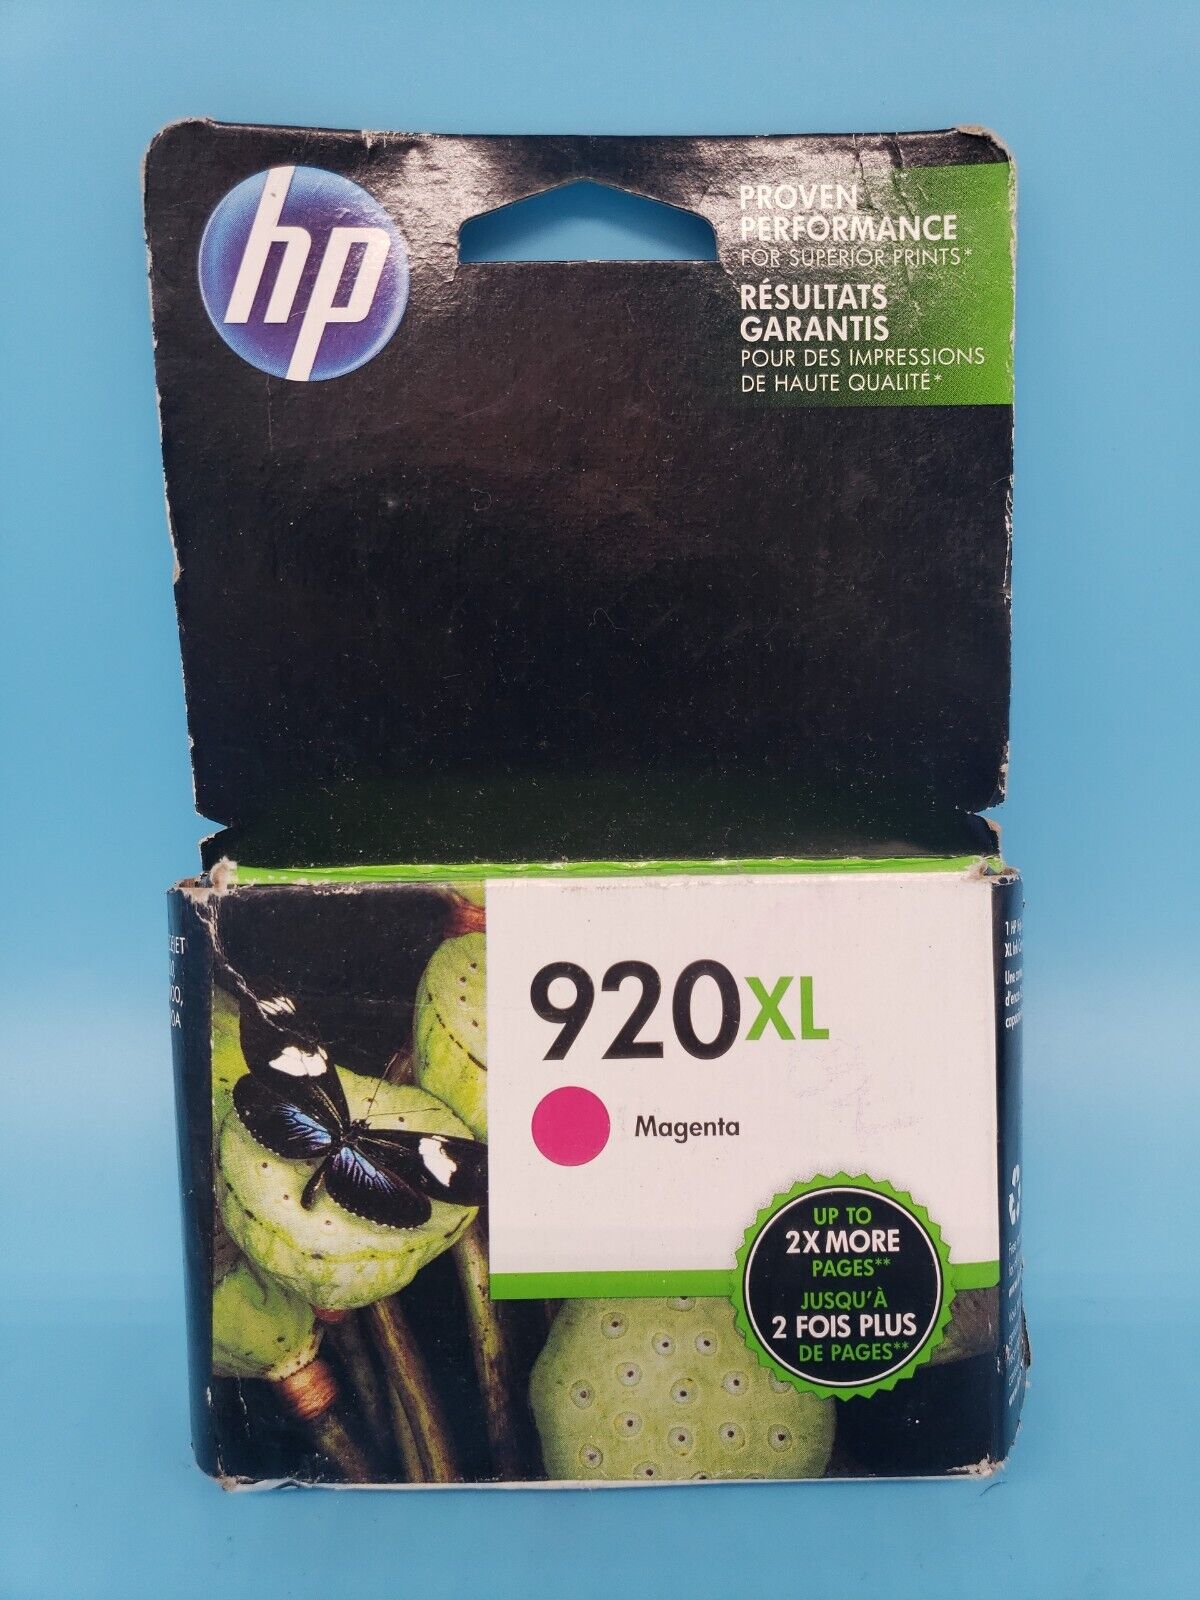 New Unopened Genuine HP OFFICEJET PRO 920XL MAGENTA Ink Sealed/Exp 2017